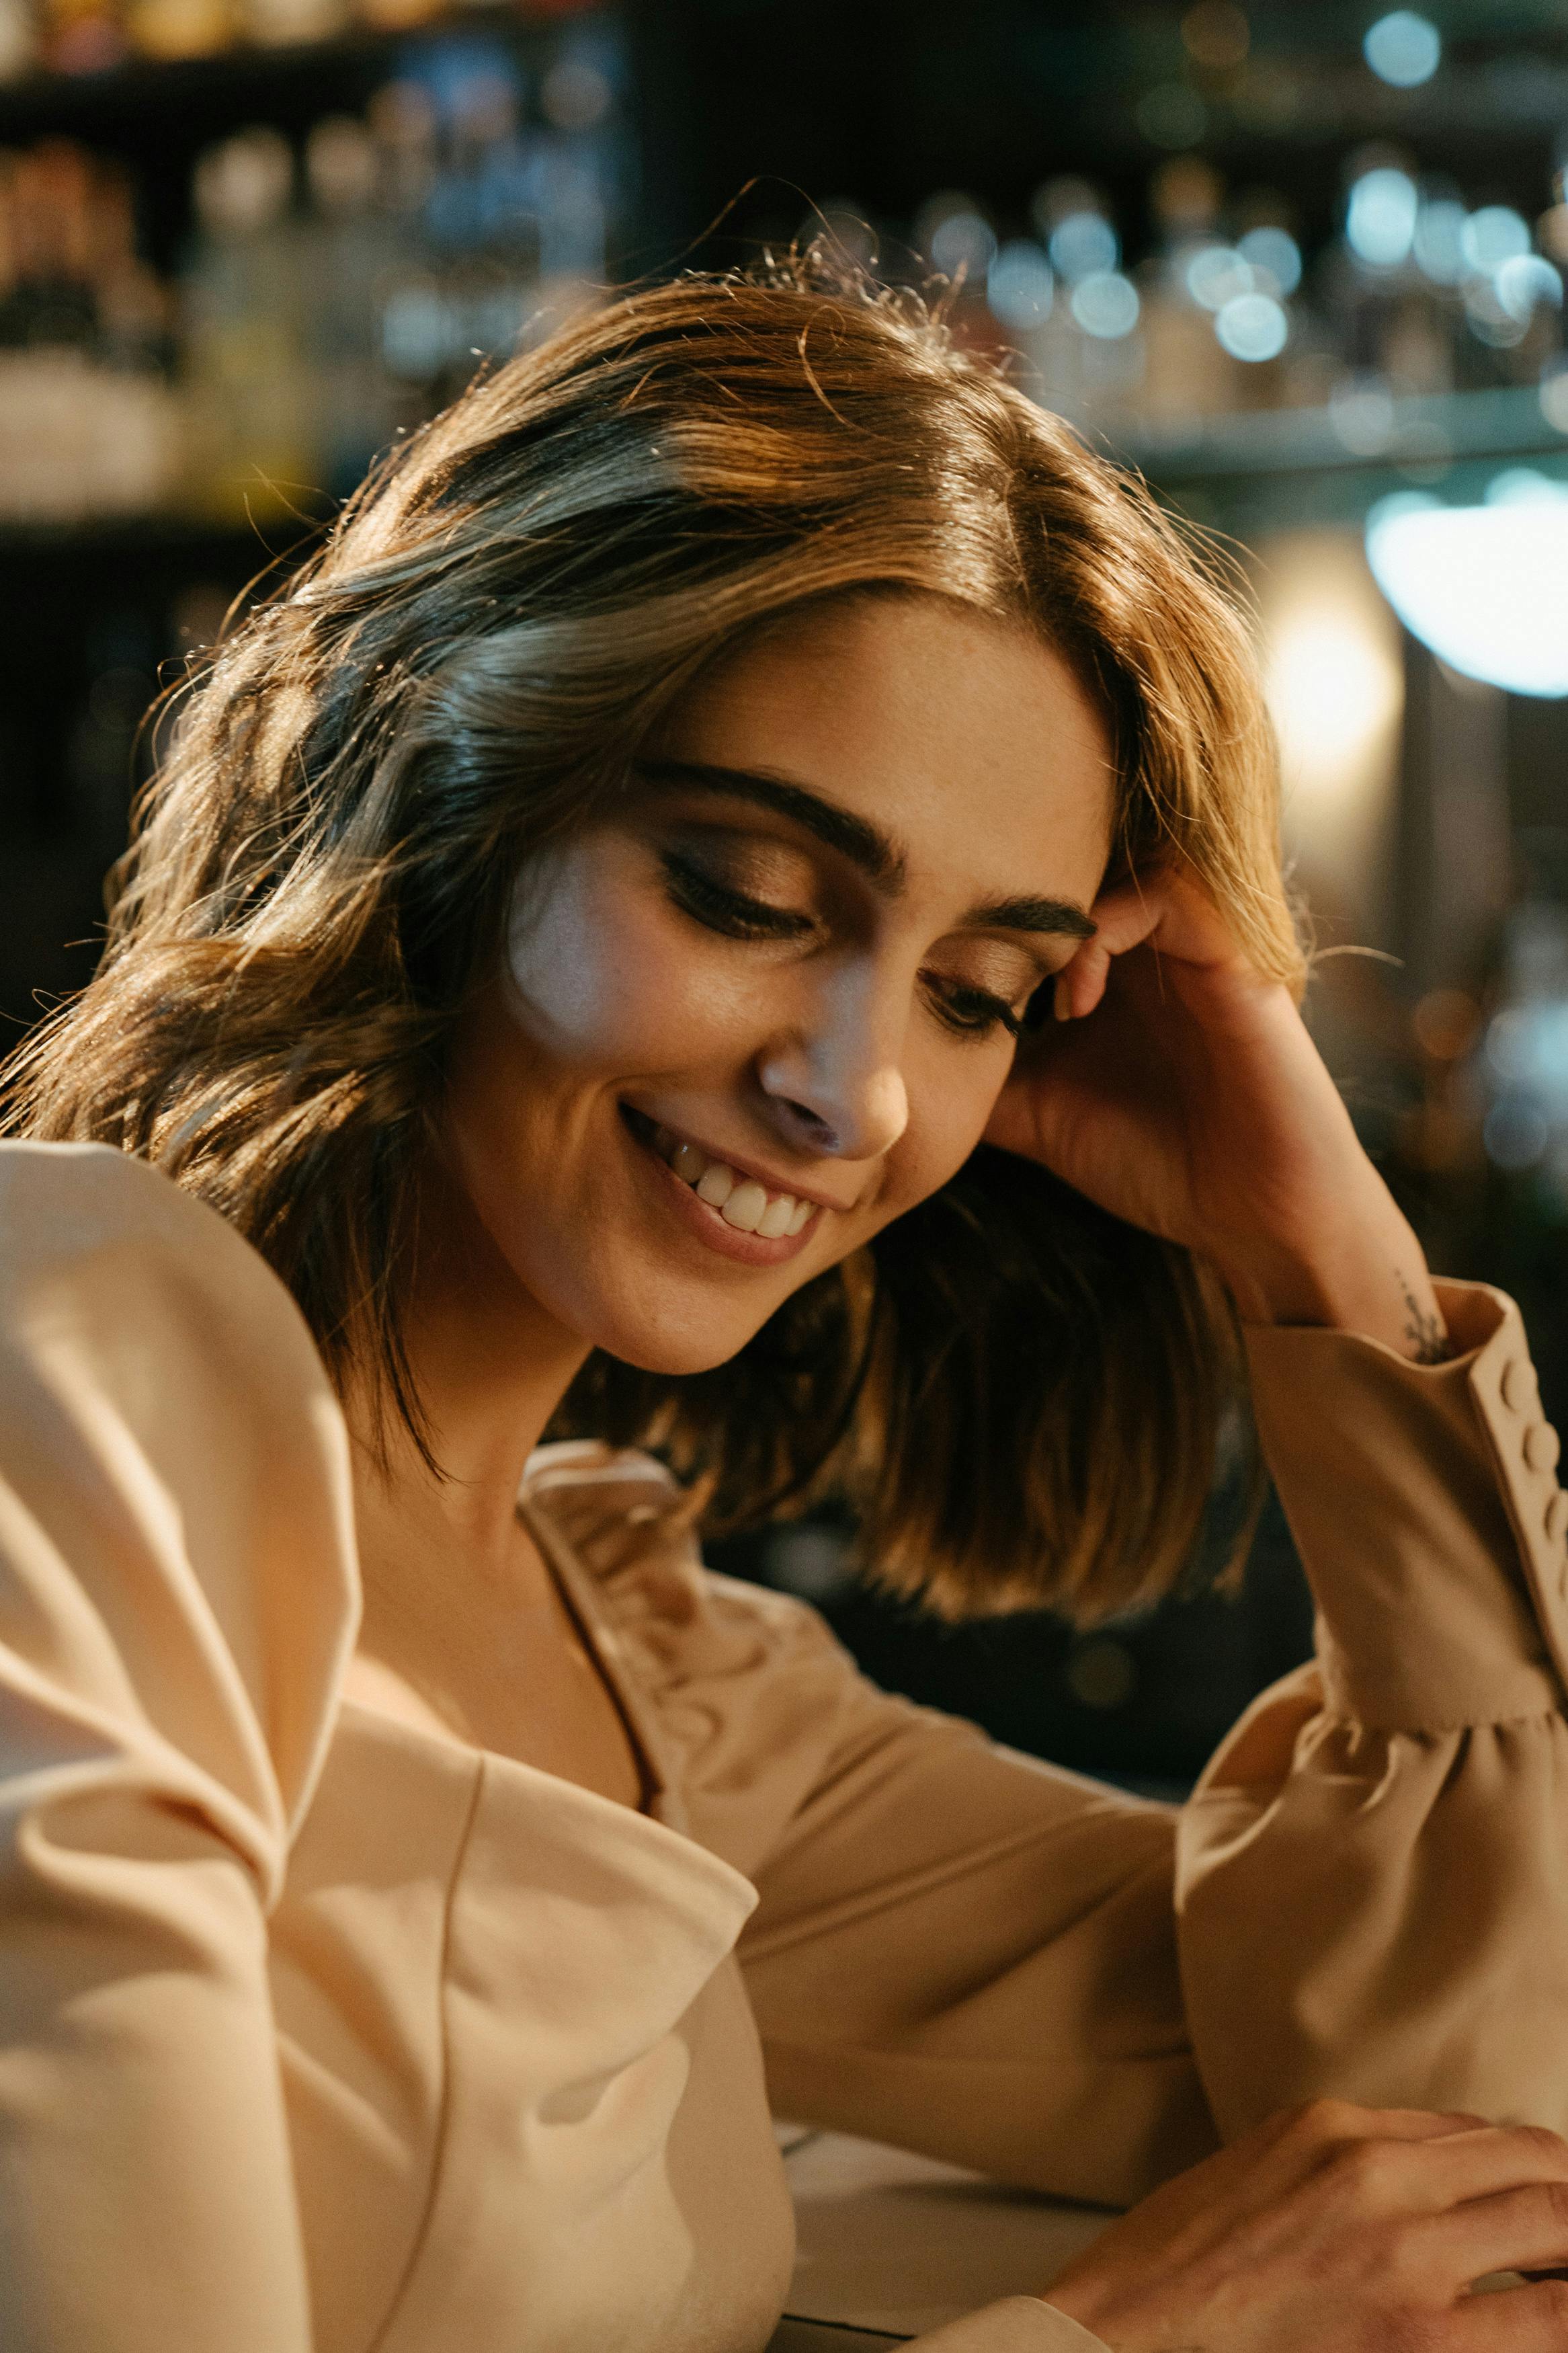 A happy woman smiling at a restaurant | Source: Pexels